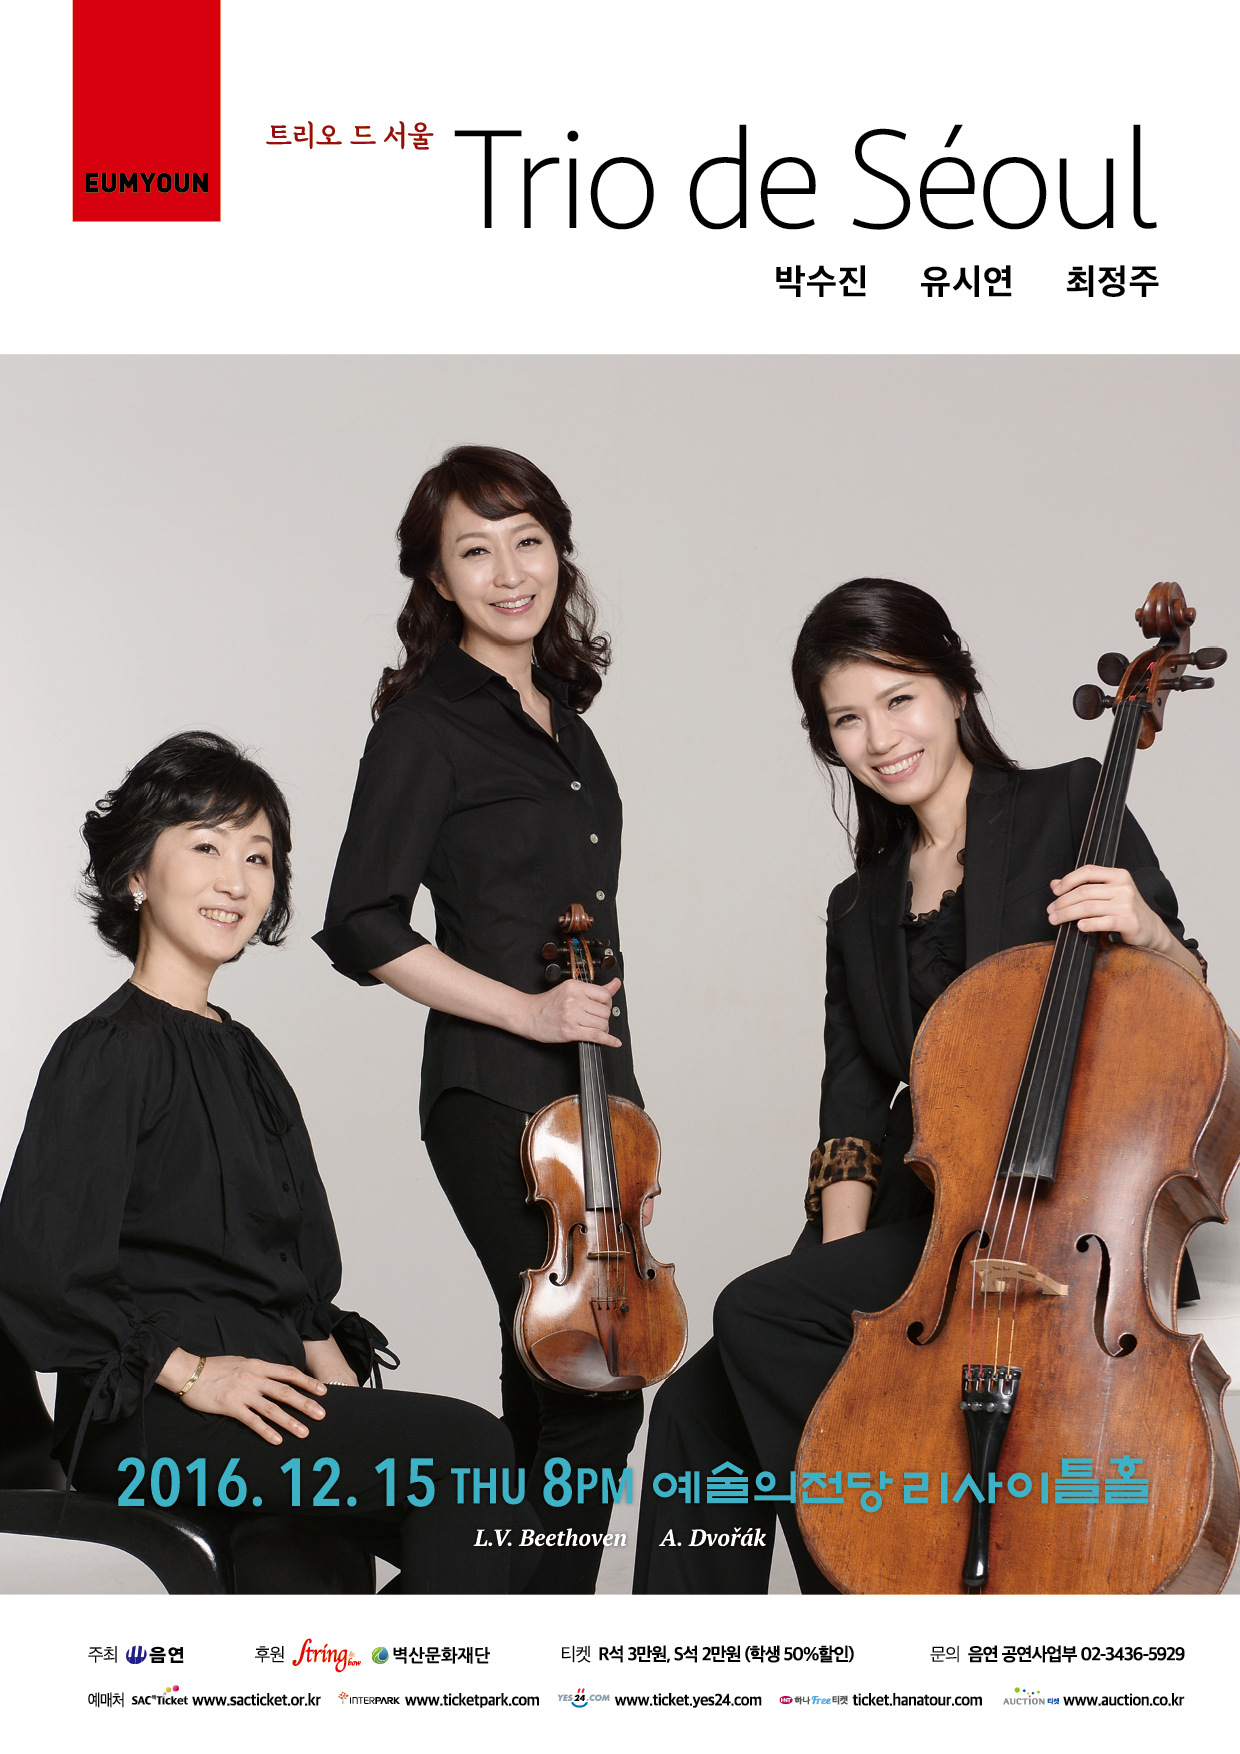 [12.15 THU 오후 8시] Trio de Seoul 정기연주회 이미지